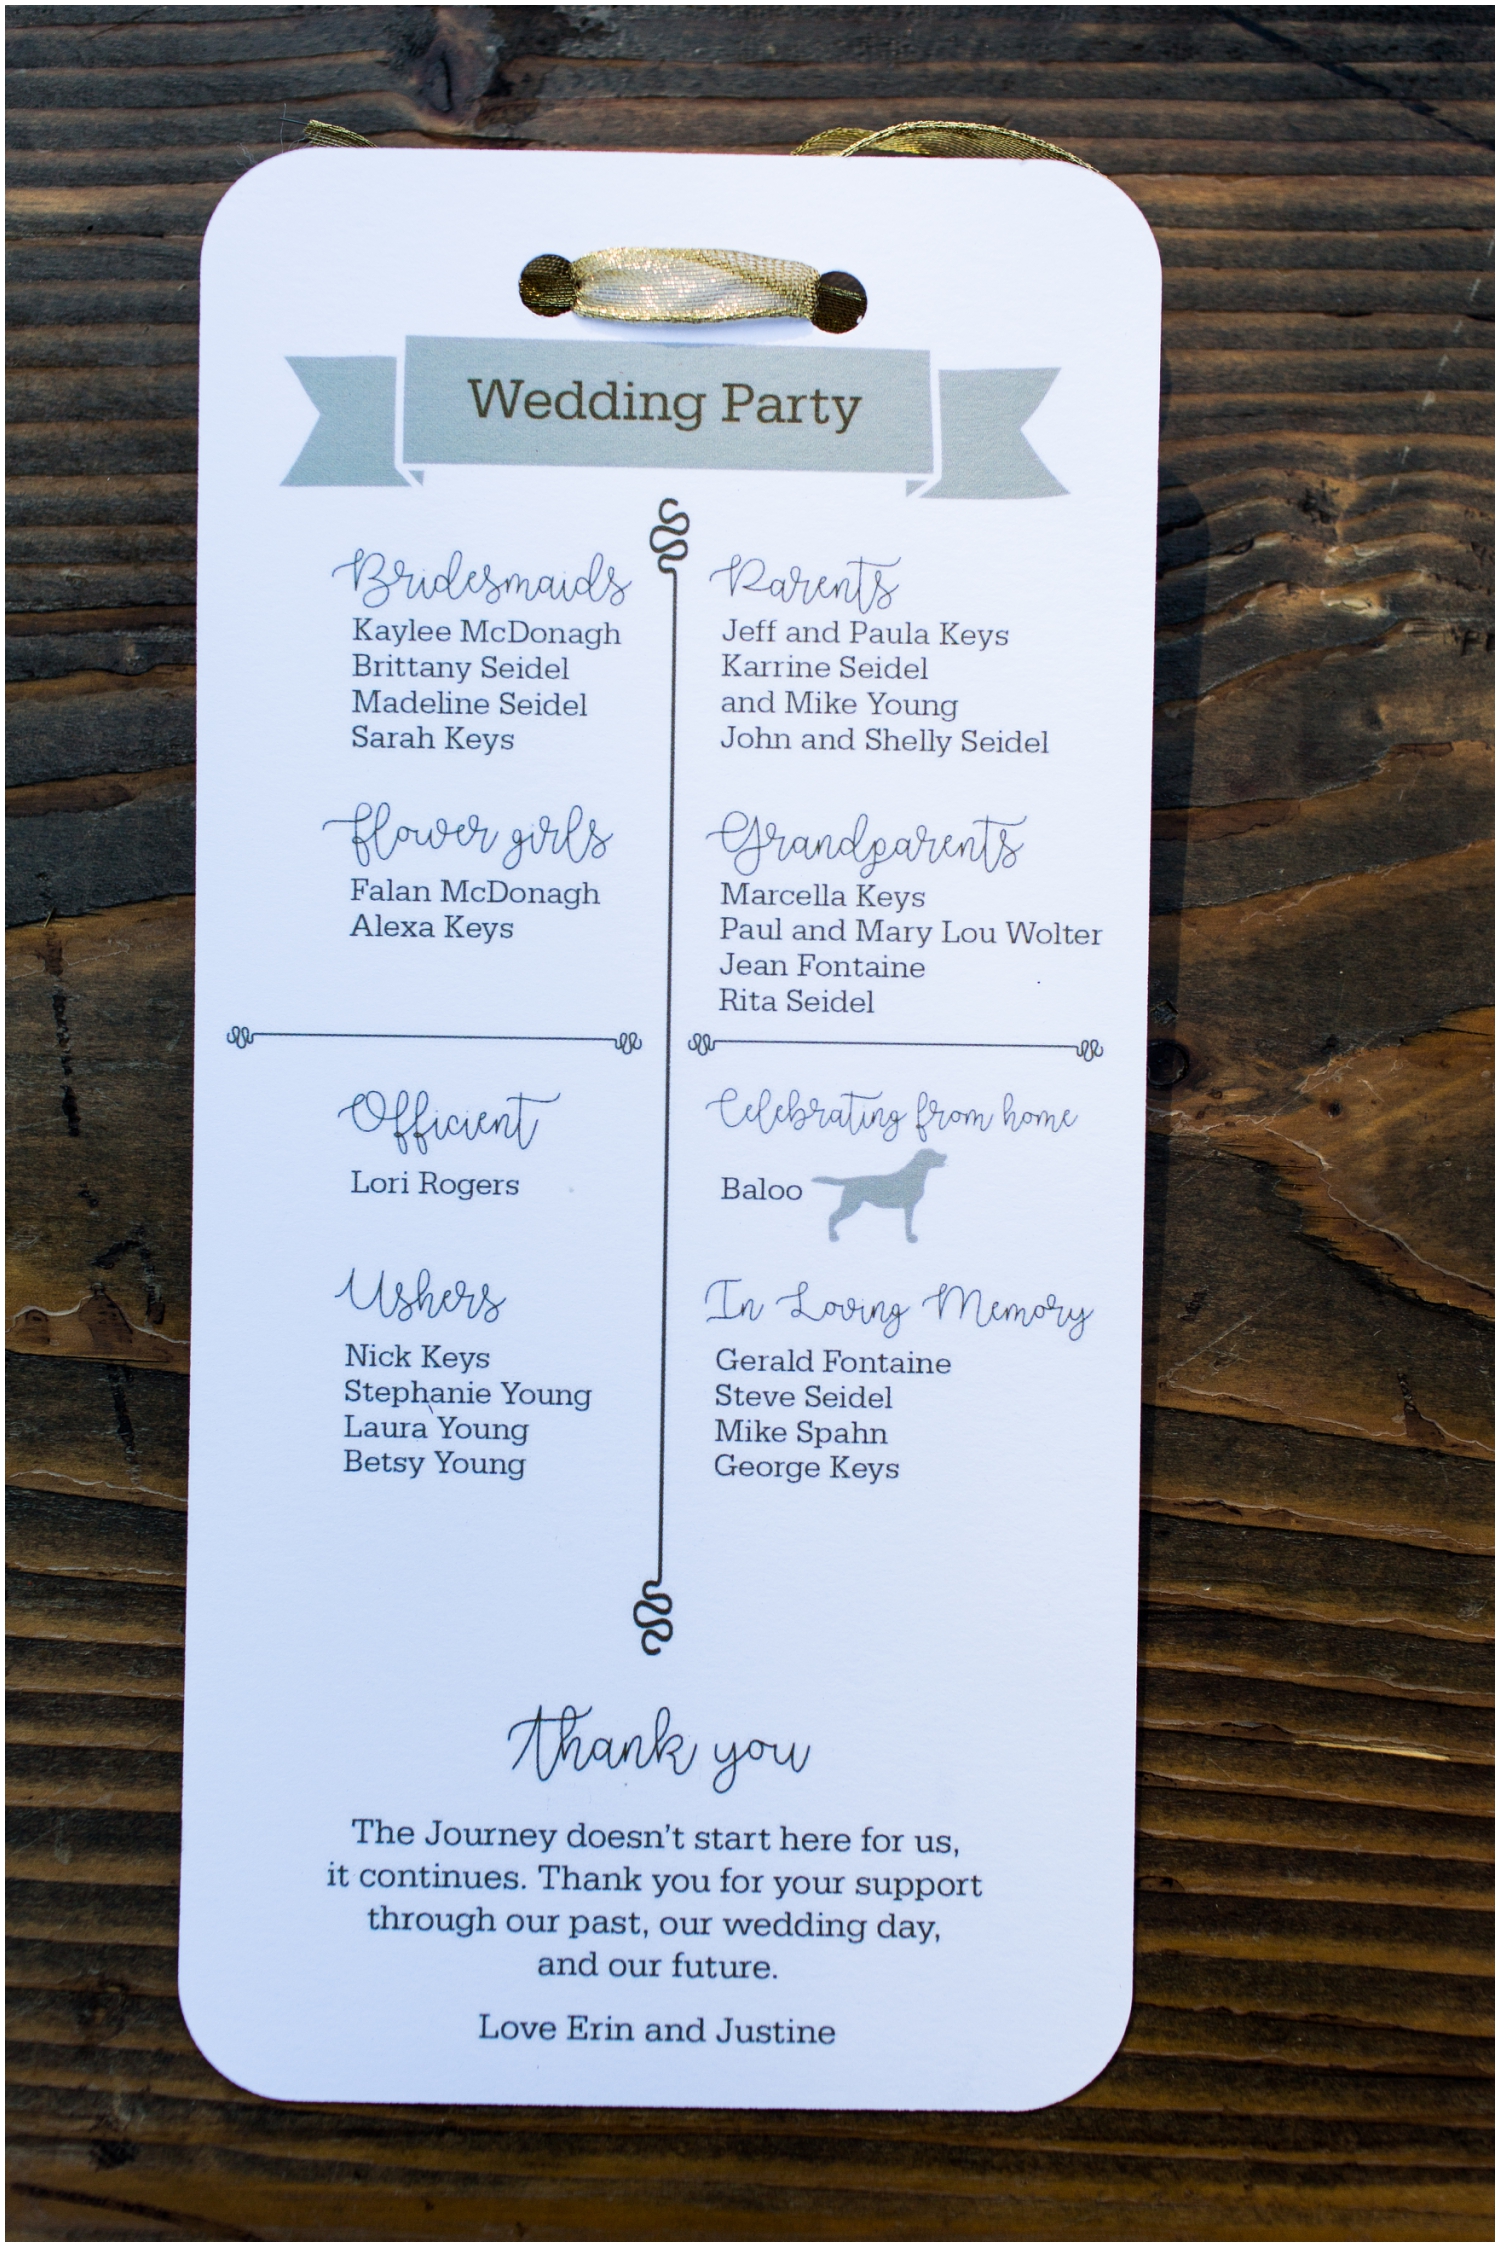  Wedding party list 